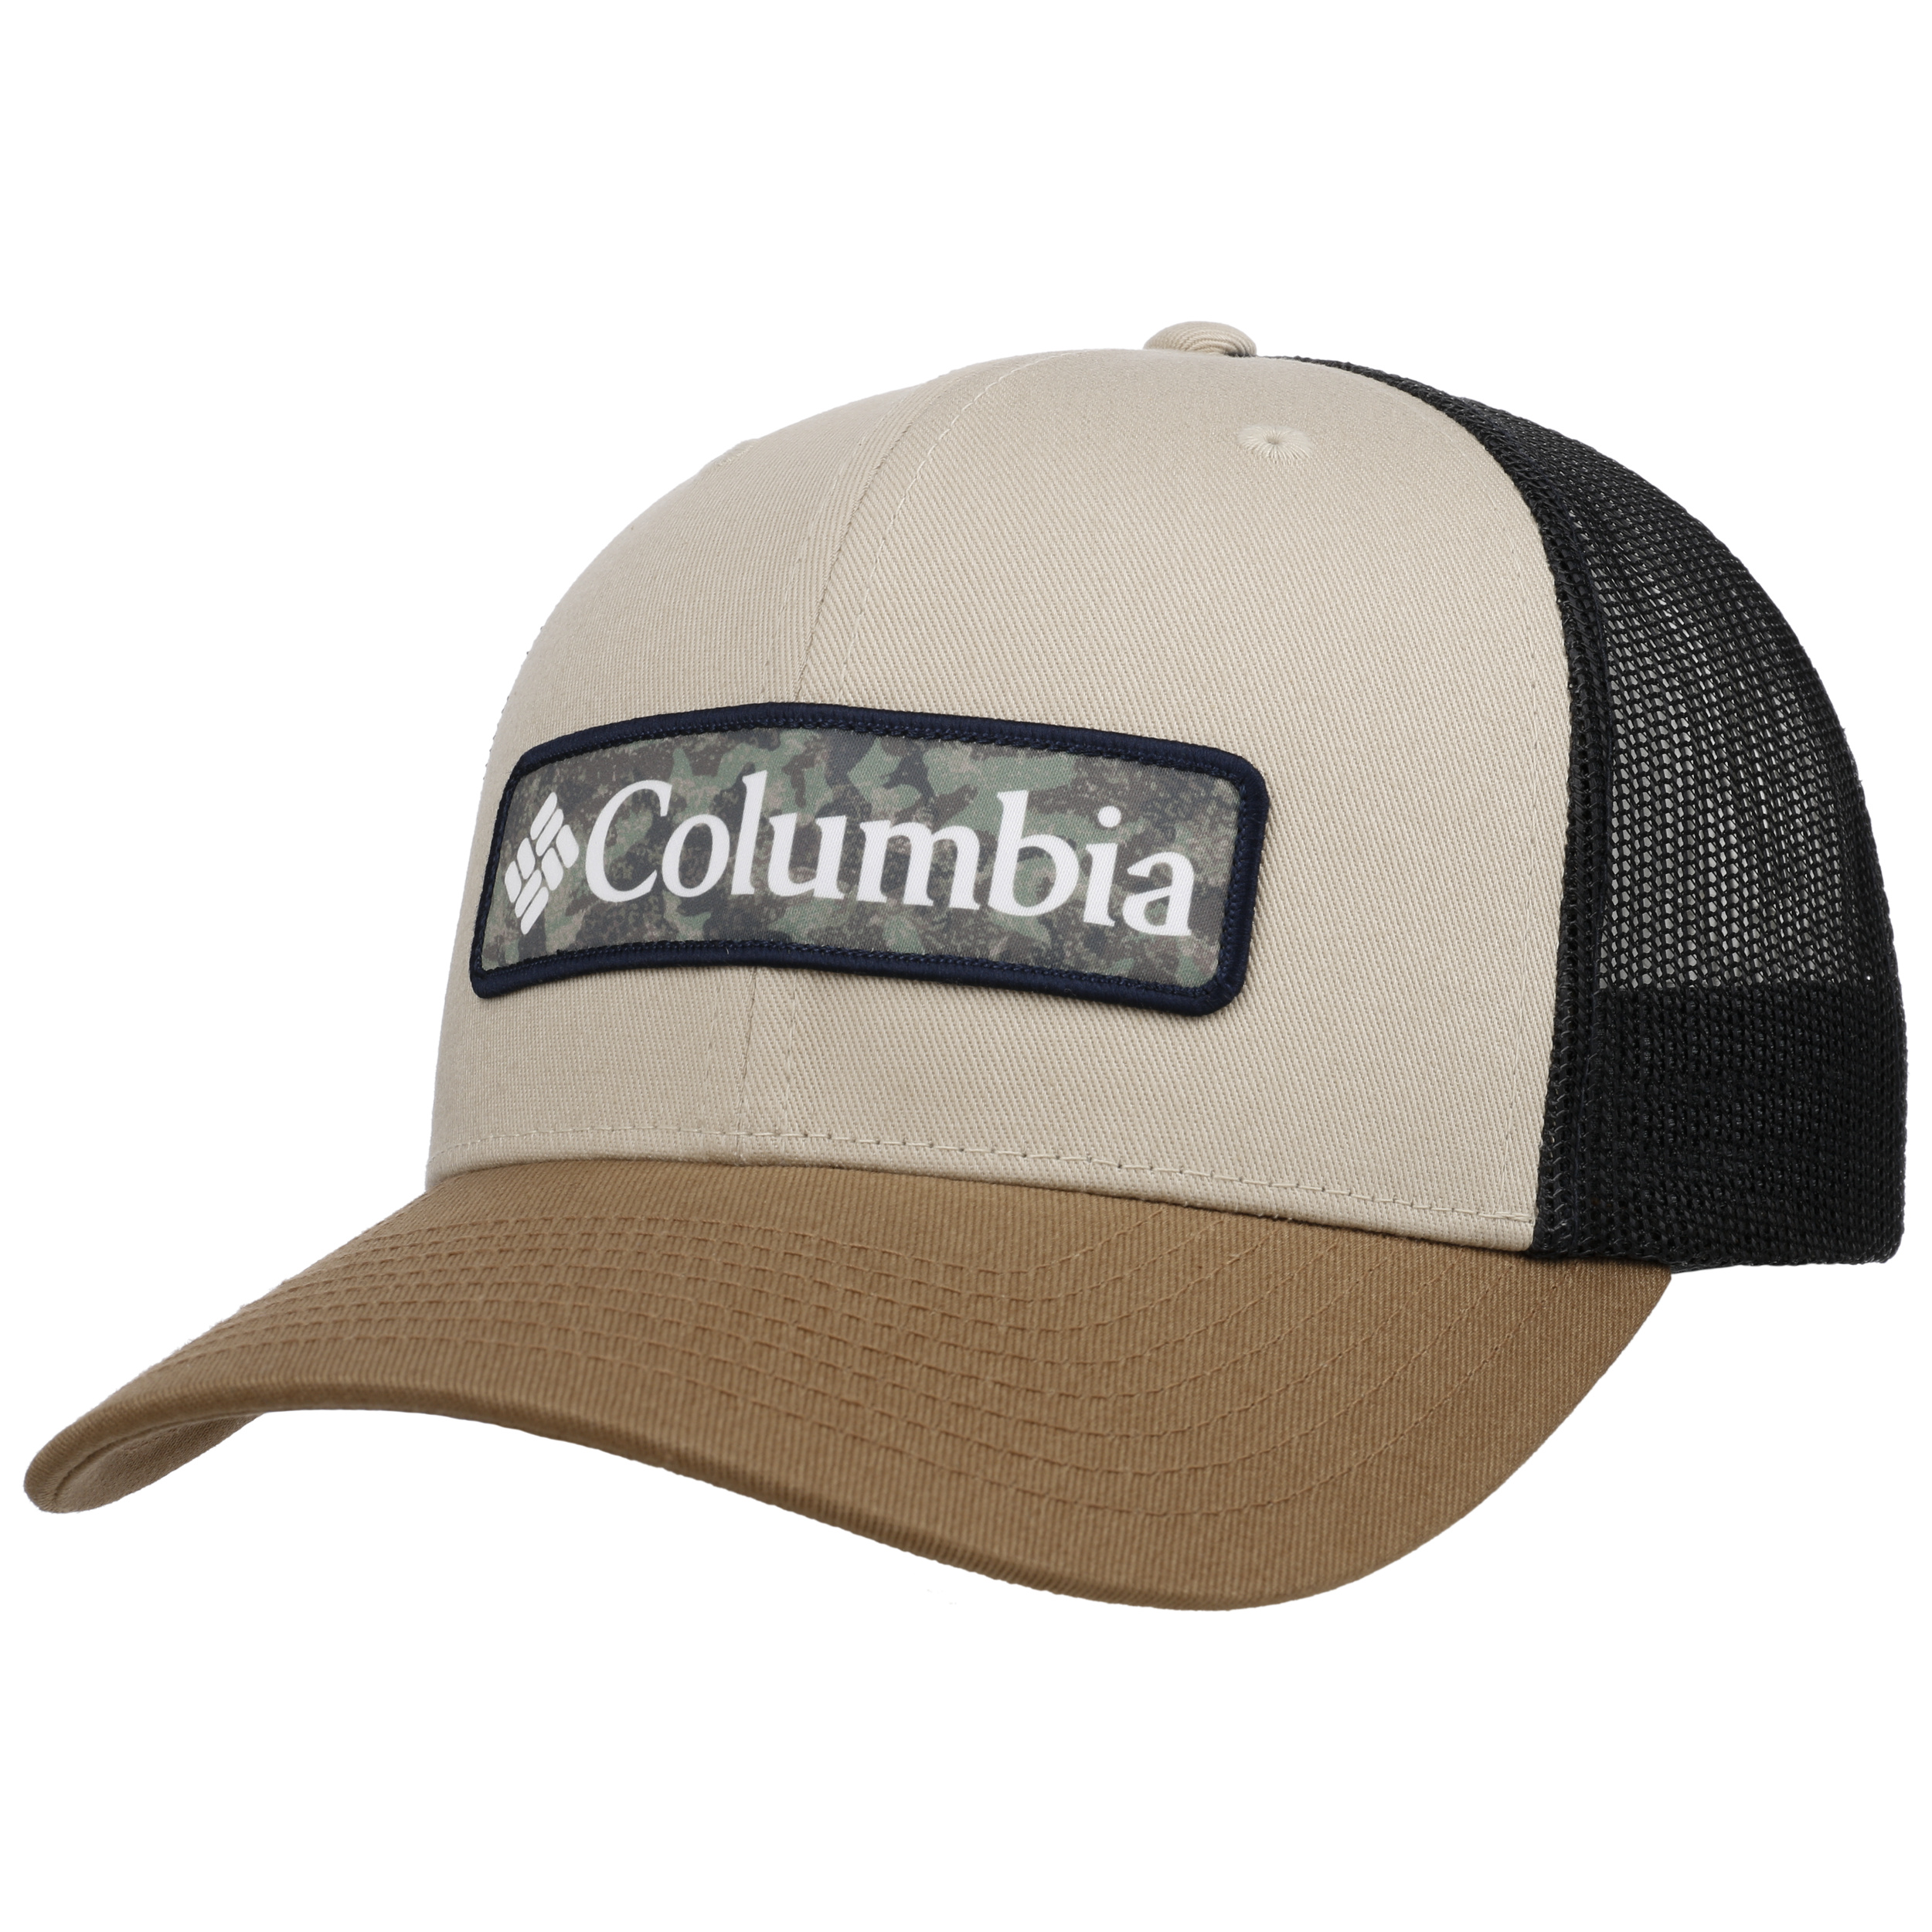 Tricolour Trucker Cap by Columbia